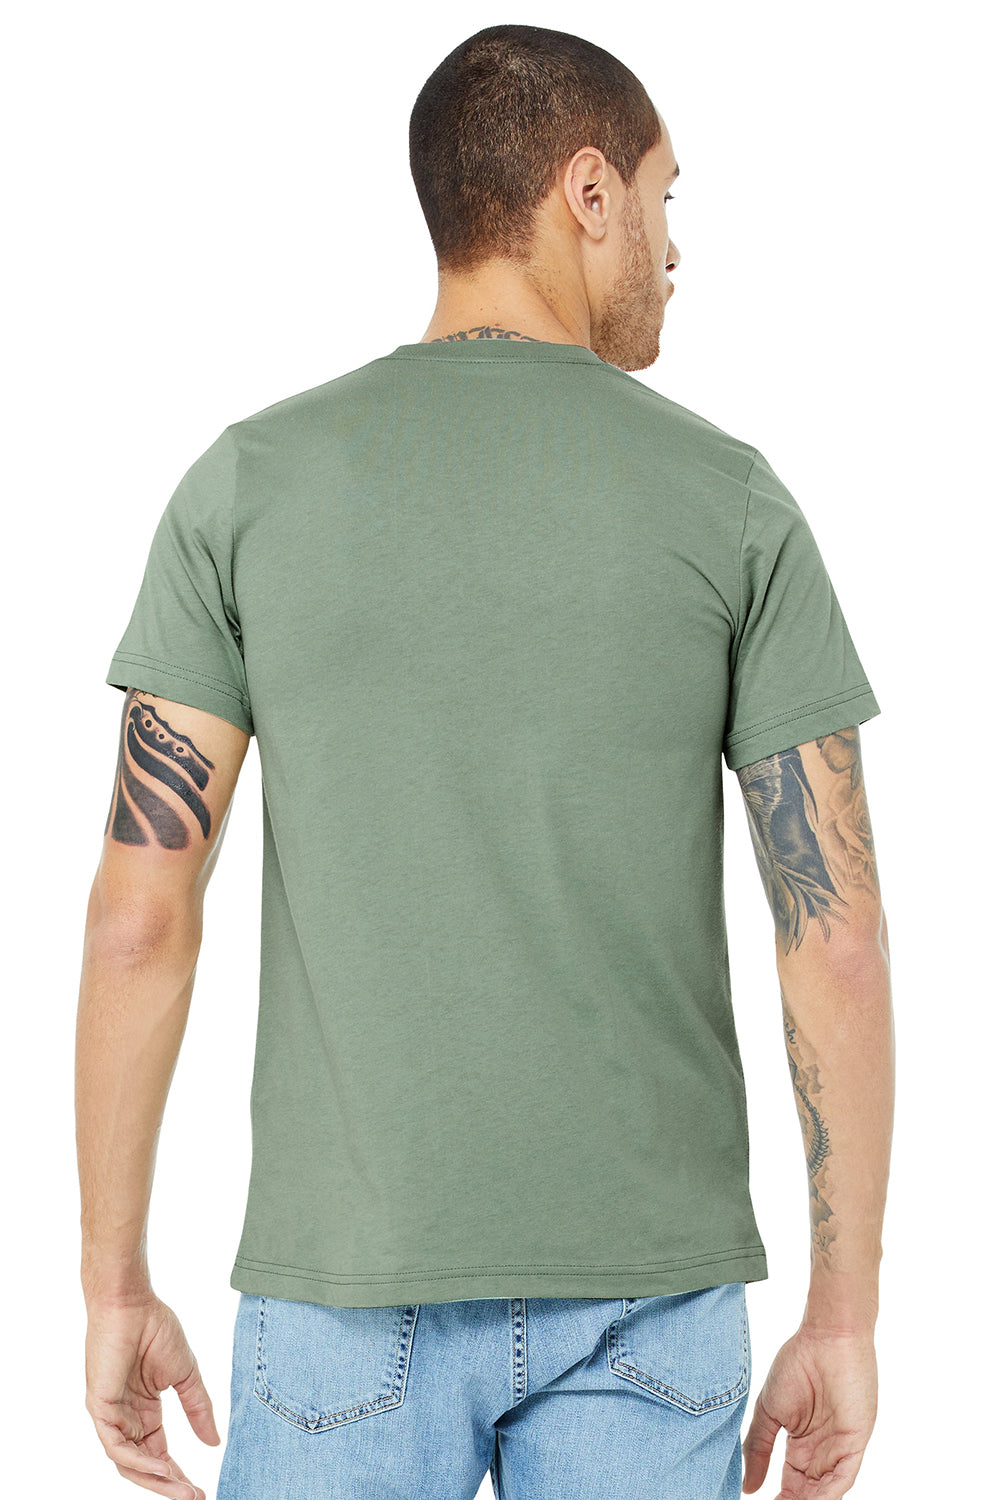 Bella + Canvas BC3001/3001C Mens Jersey Short Sleeve Crewneck T-Shirt Sage Green Model Back